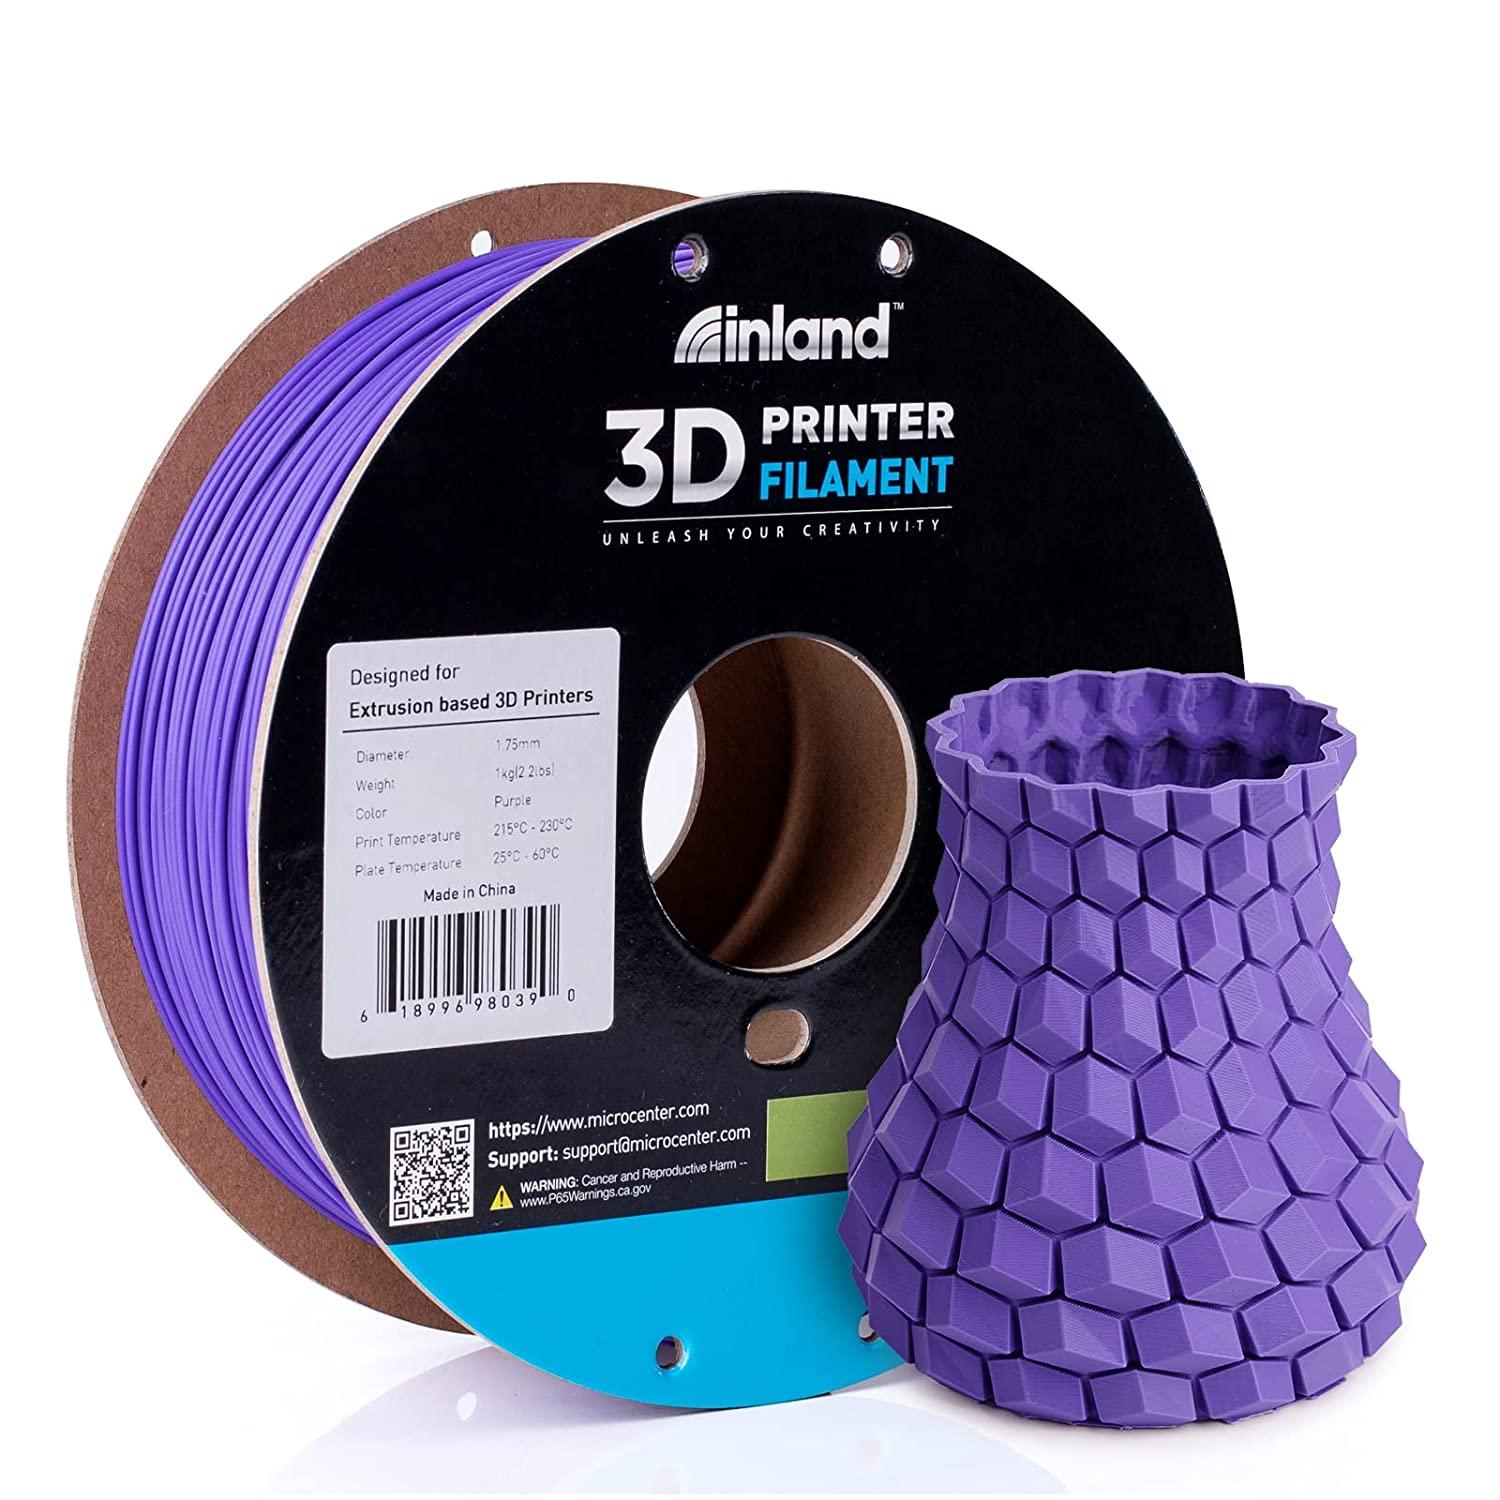 Inland 3D Printer Filament for $15.38